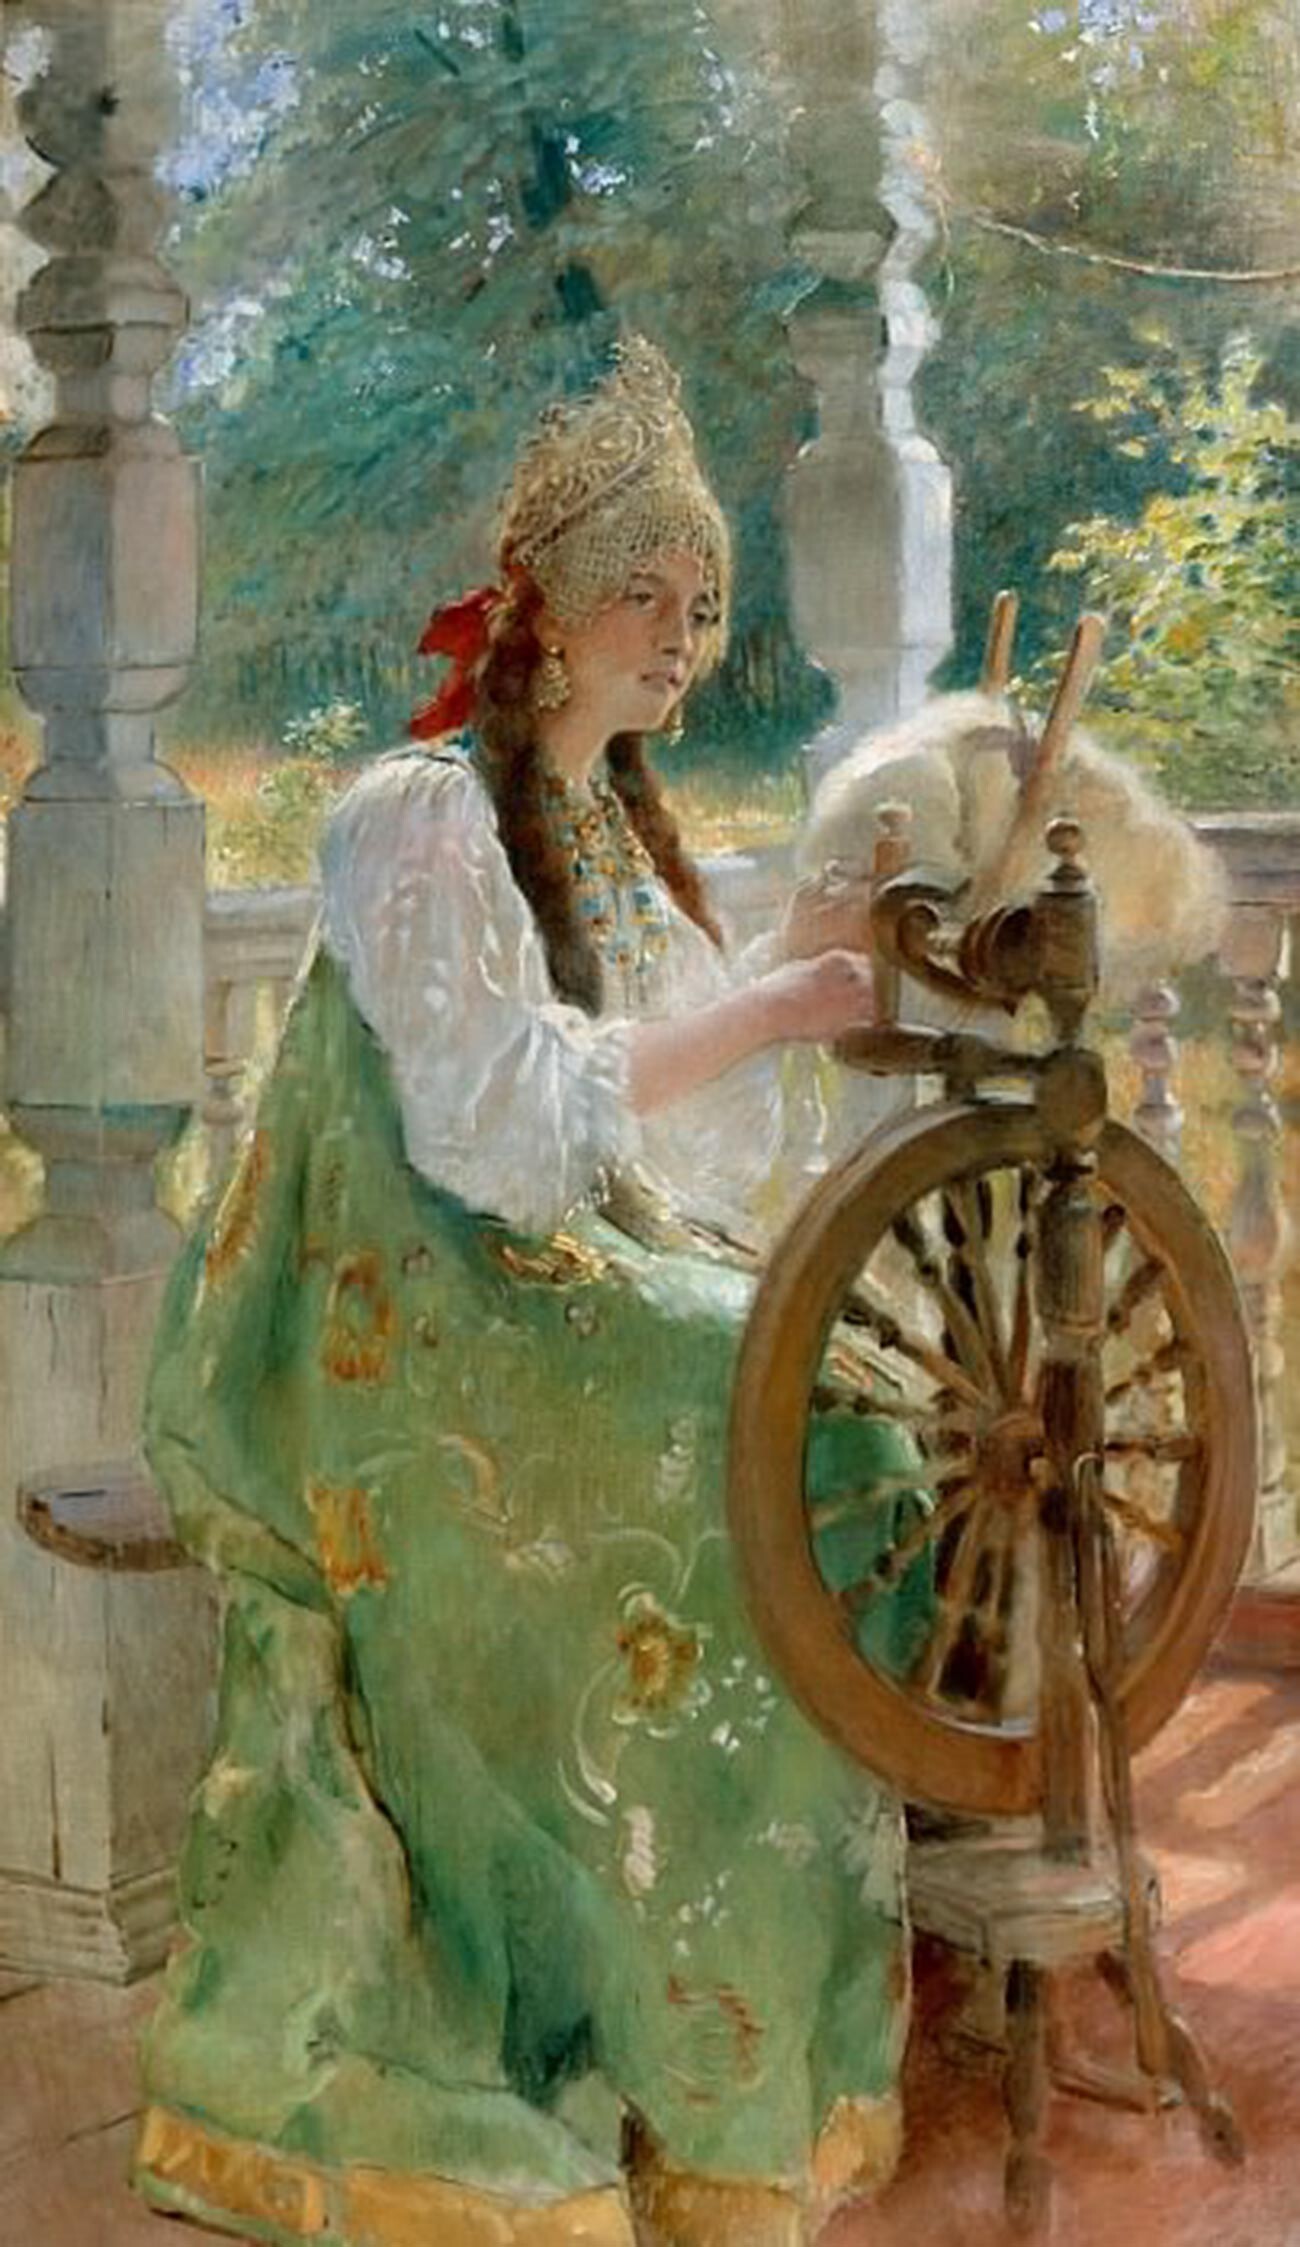 Constantin Makovski. Au rouet, 1900

